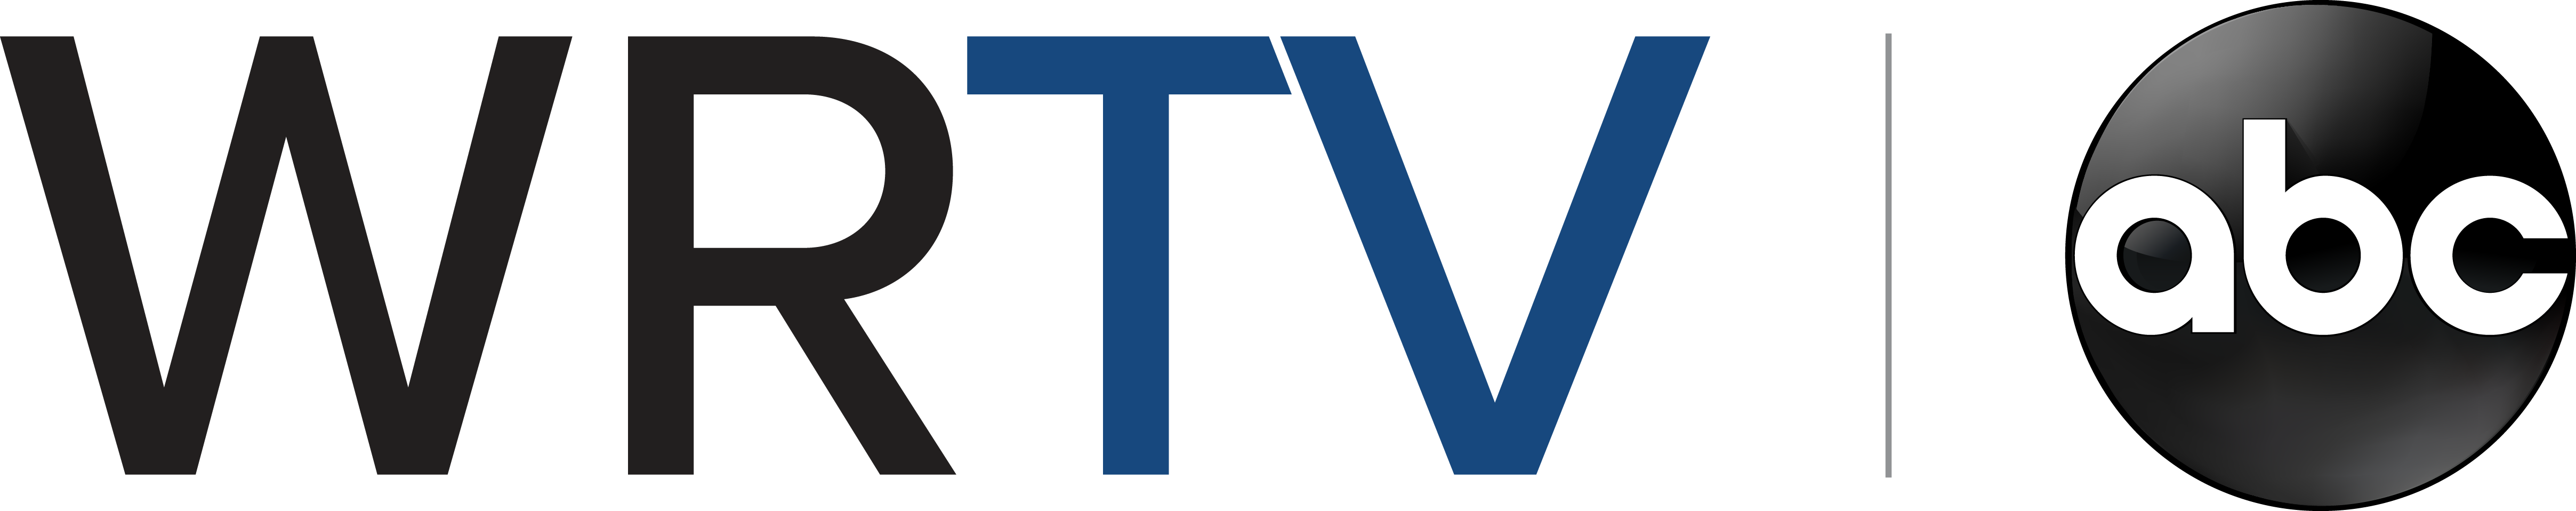 WRTV-6 sponsor logo